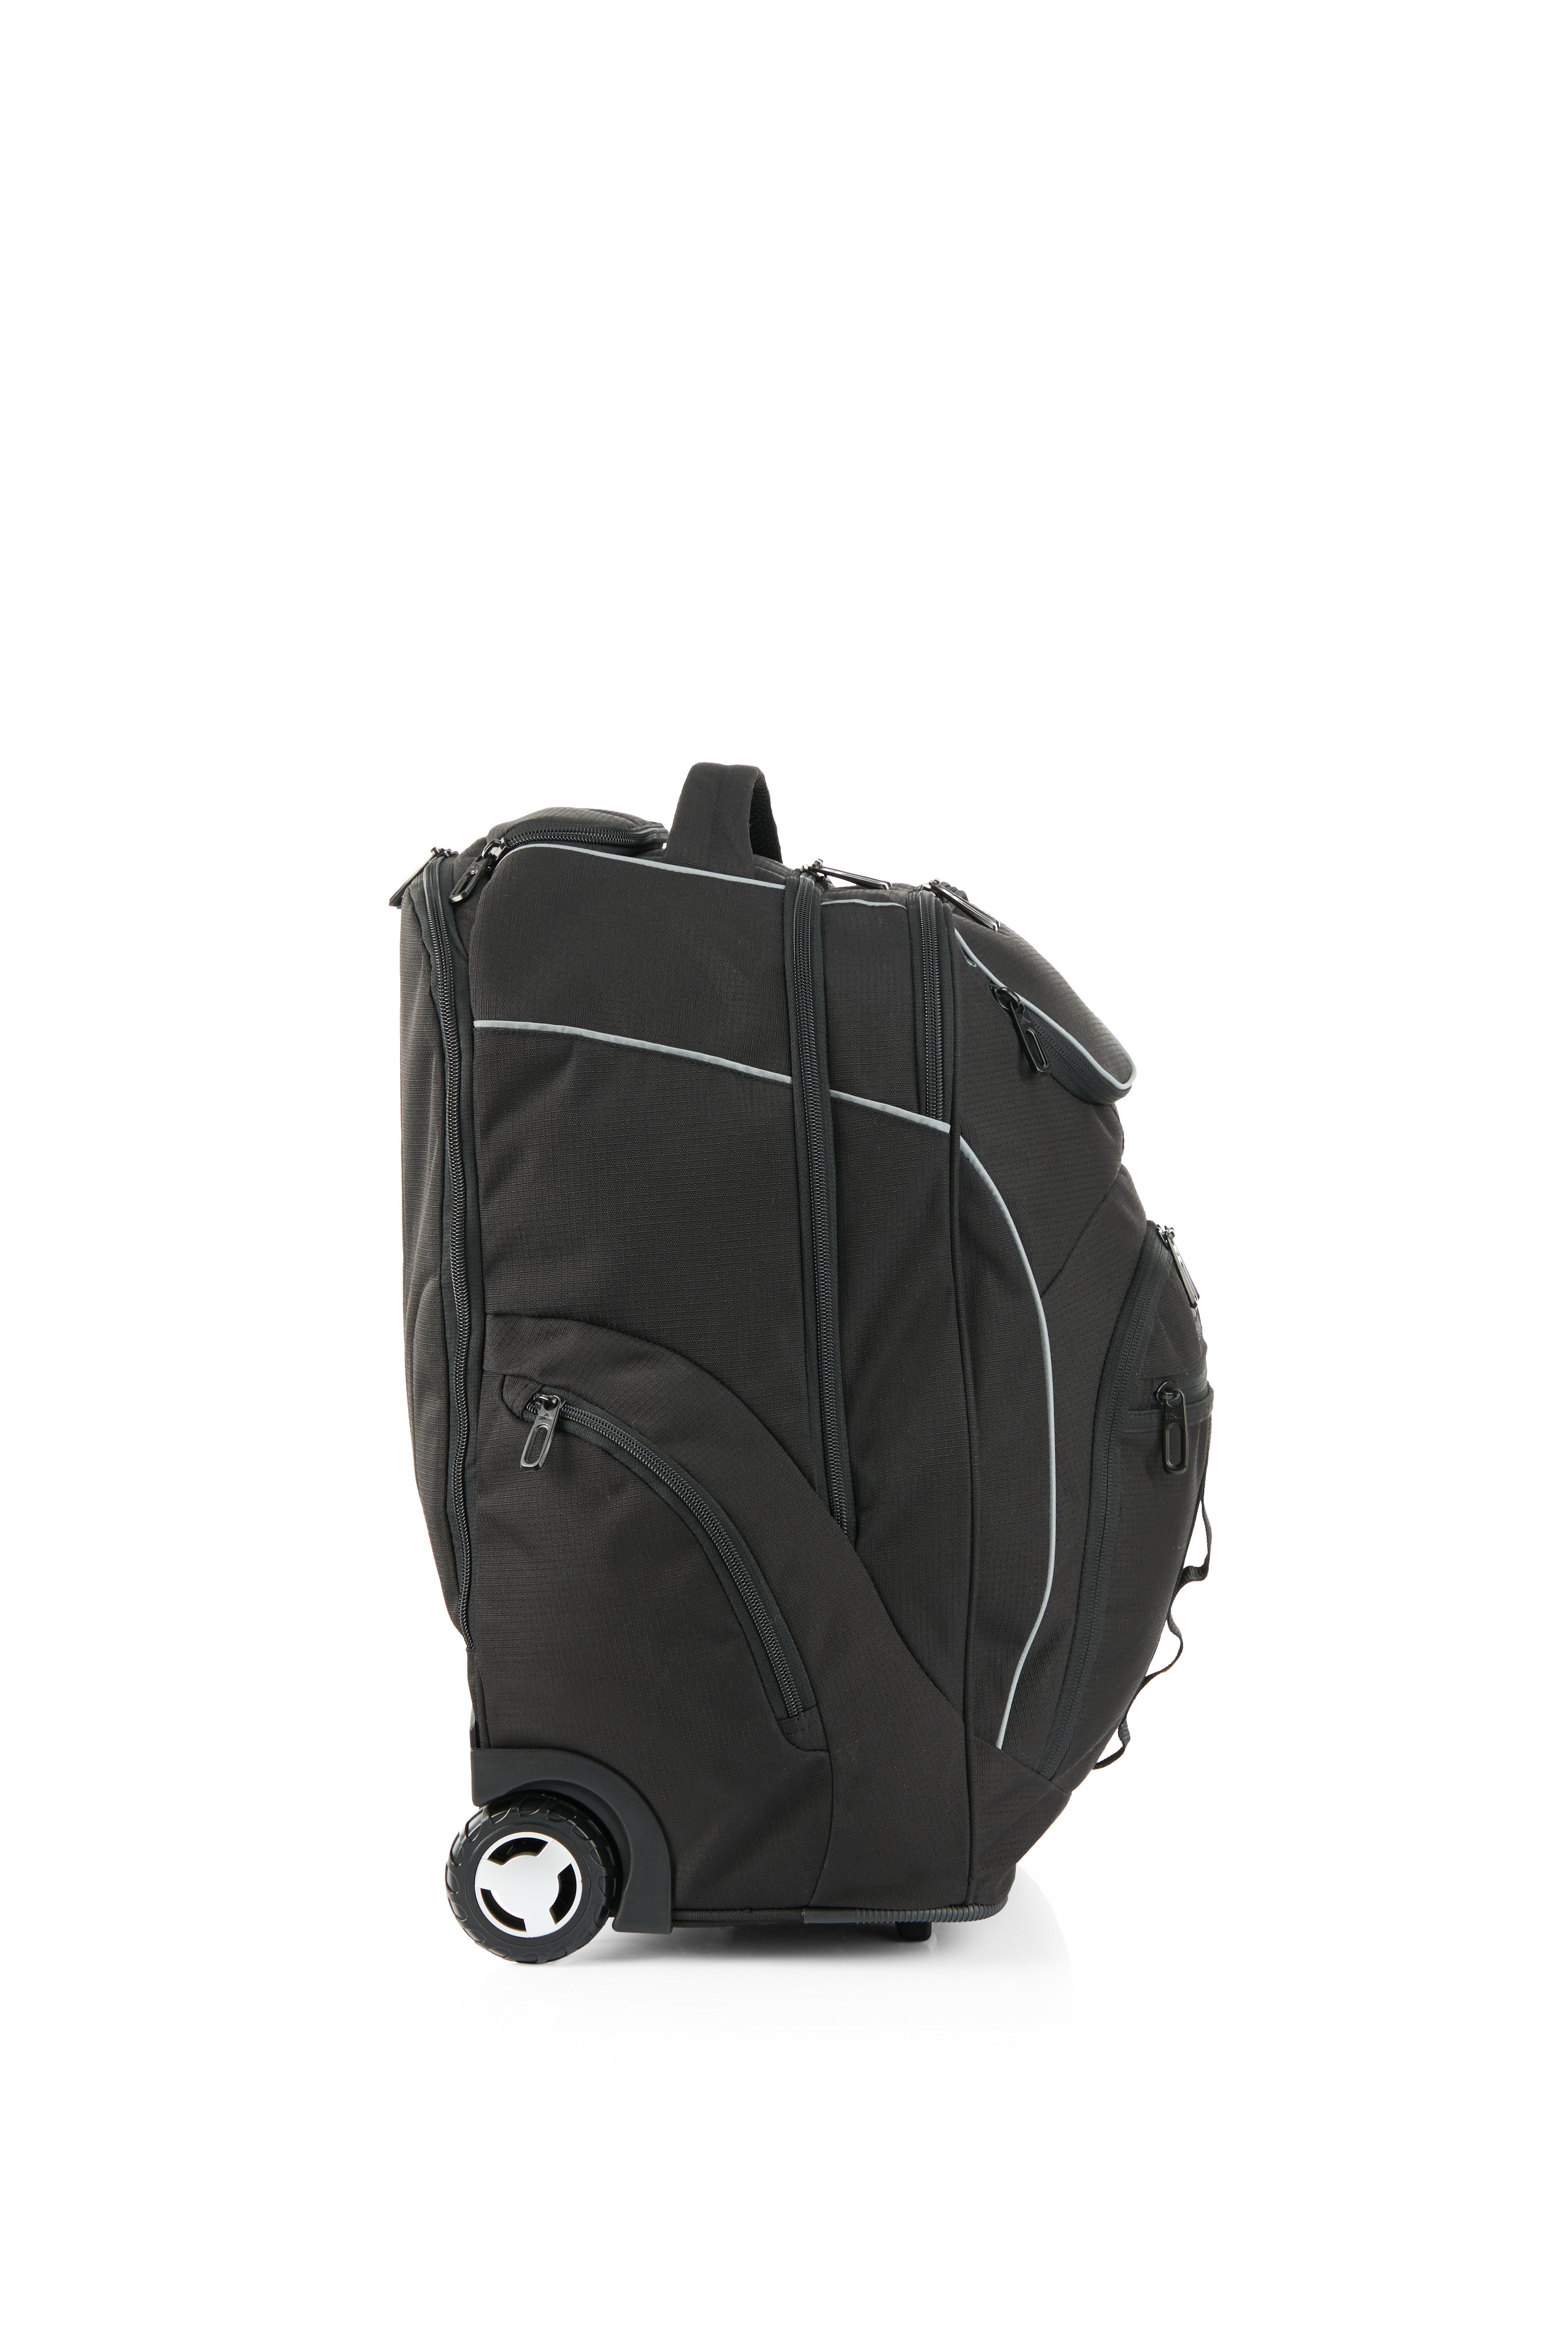 High Sierra - Access 3.0 Eco Pro Wheeled backpack - Black-6